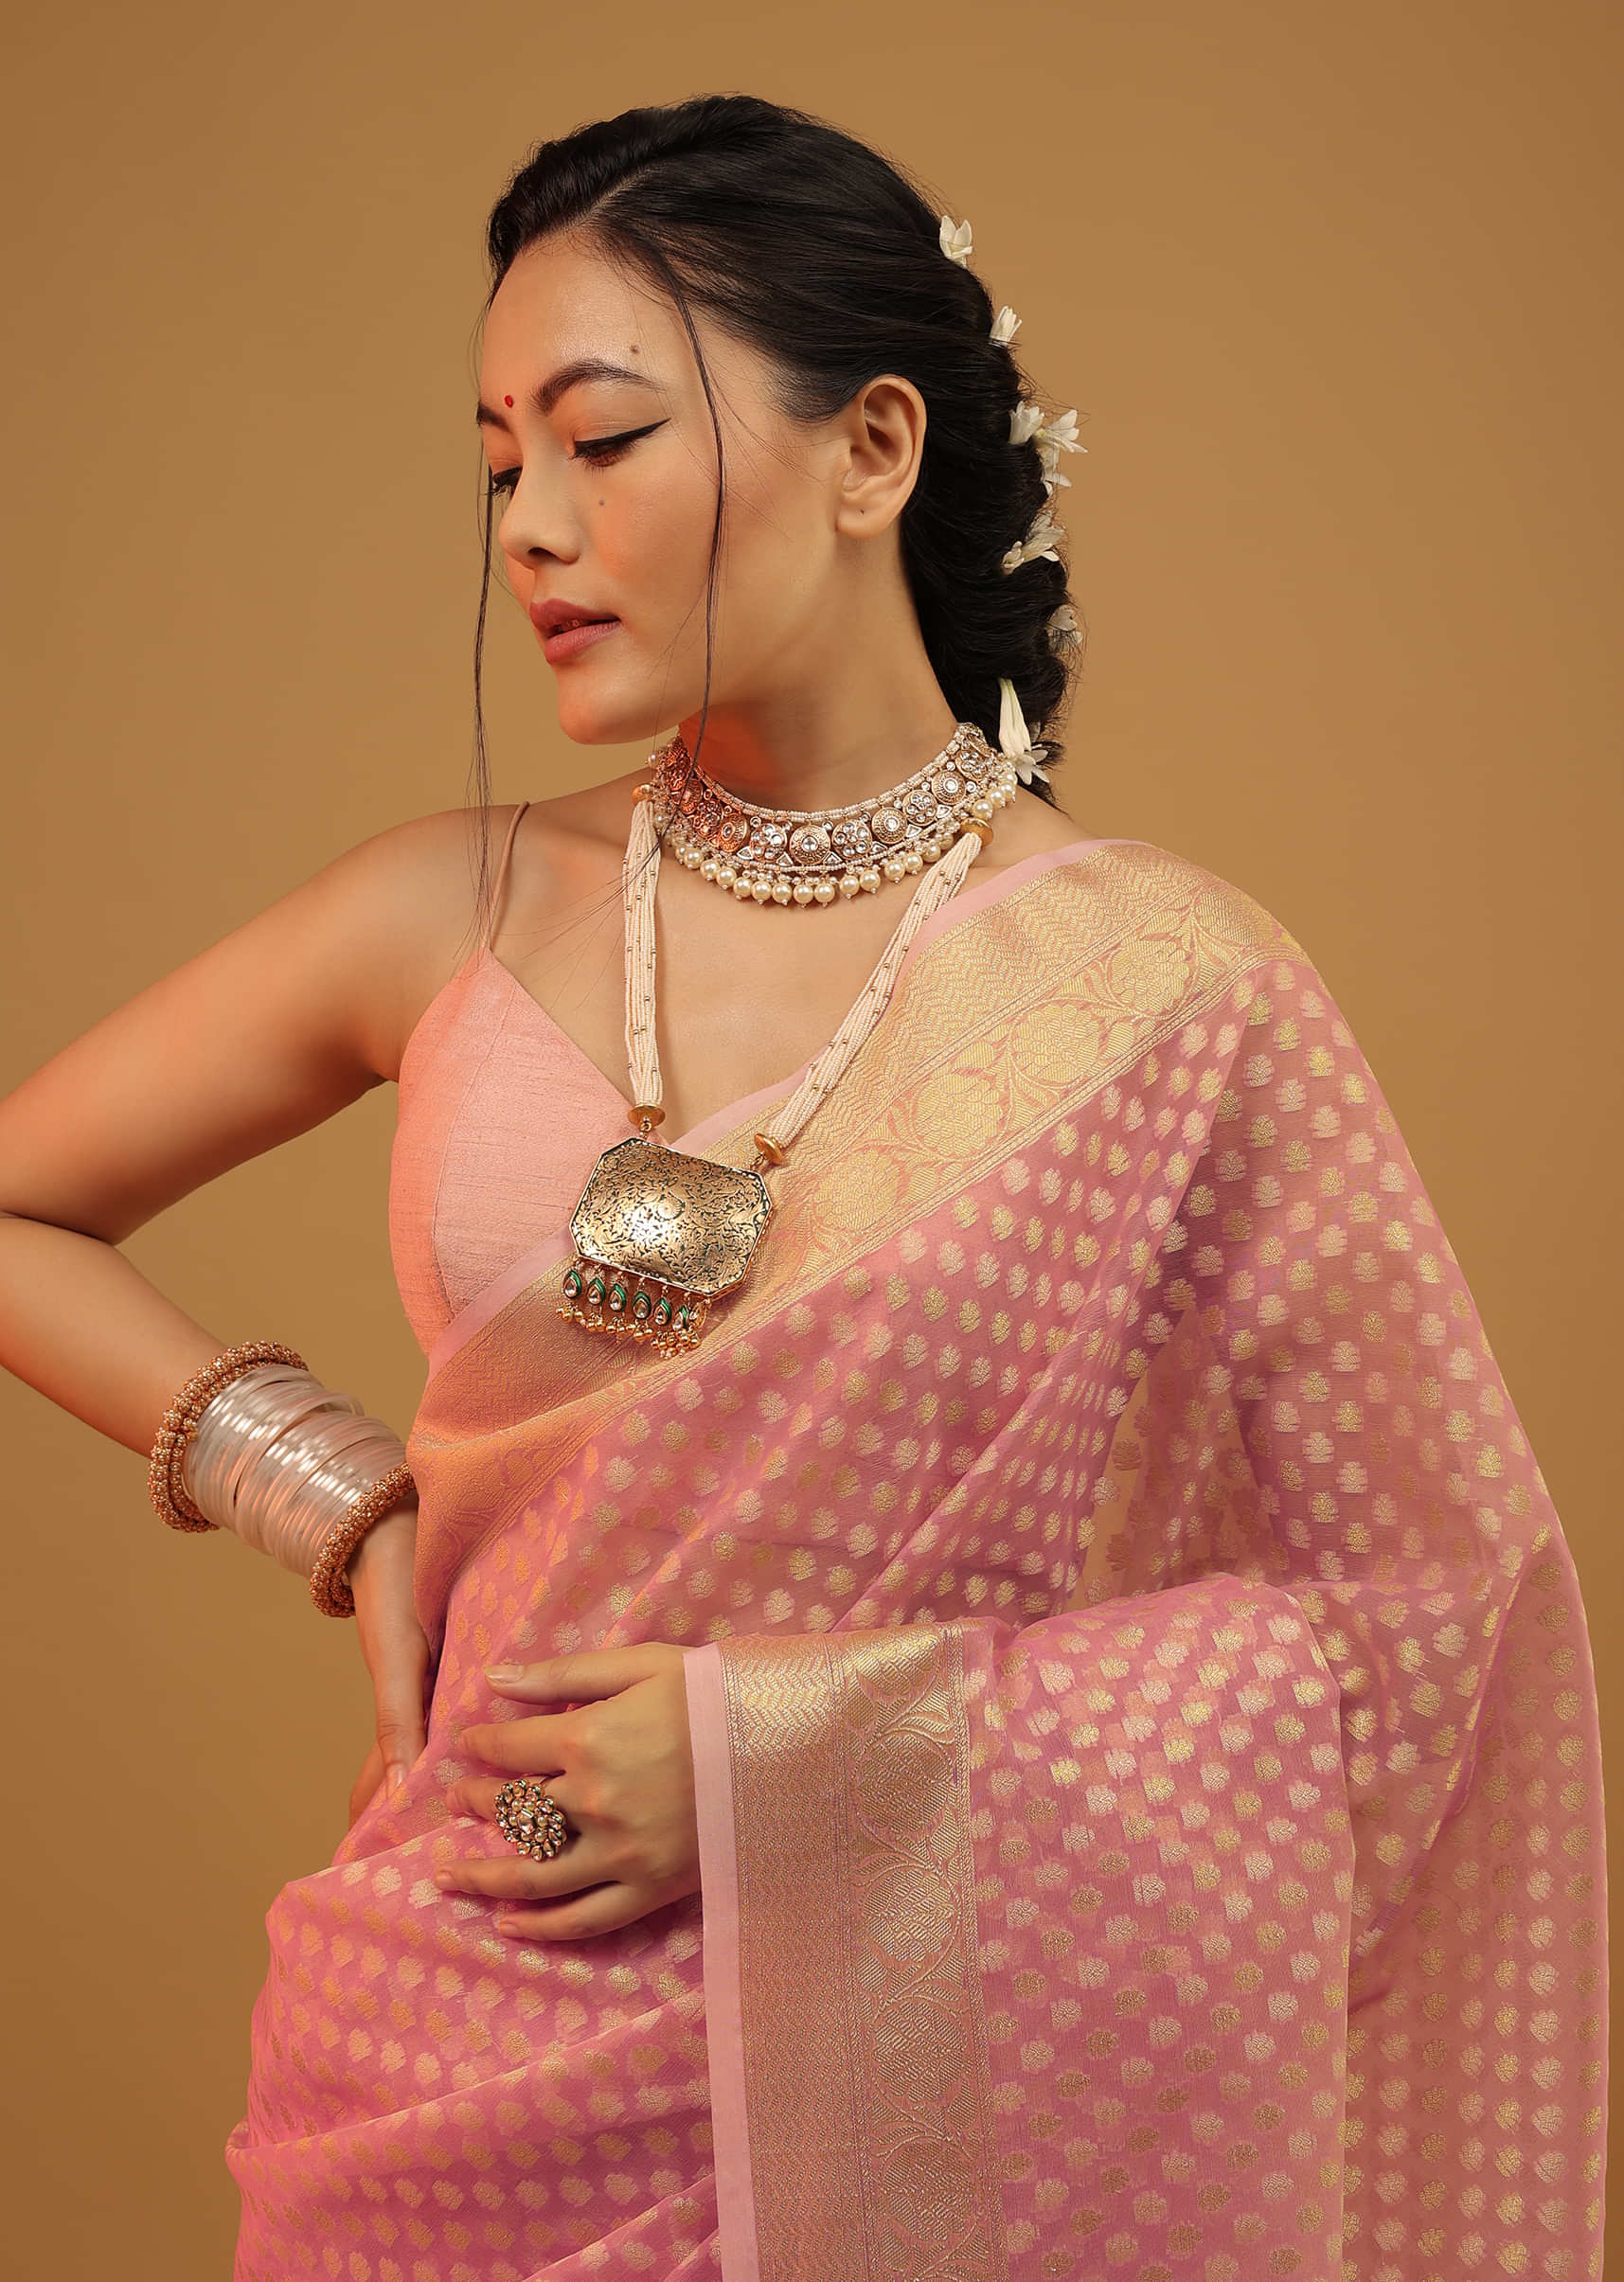 Rouge Pink Saree In Pure Handloom Cotton And Banarasi Chanderi